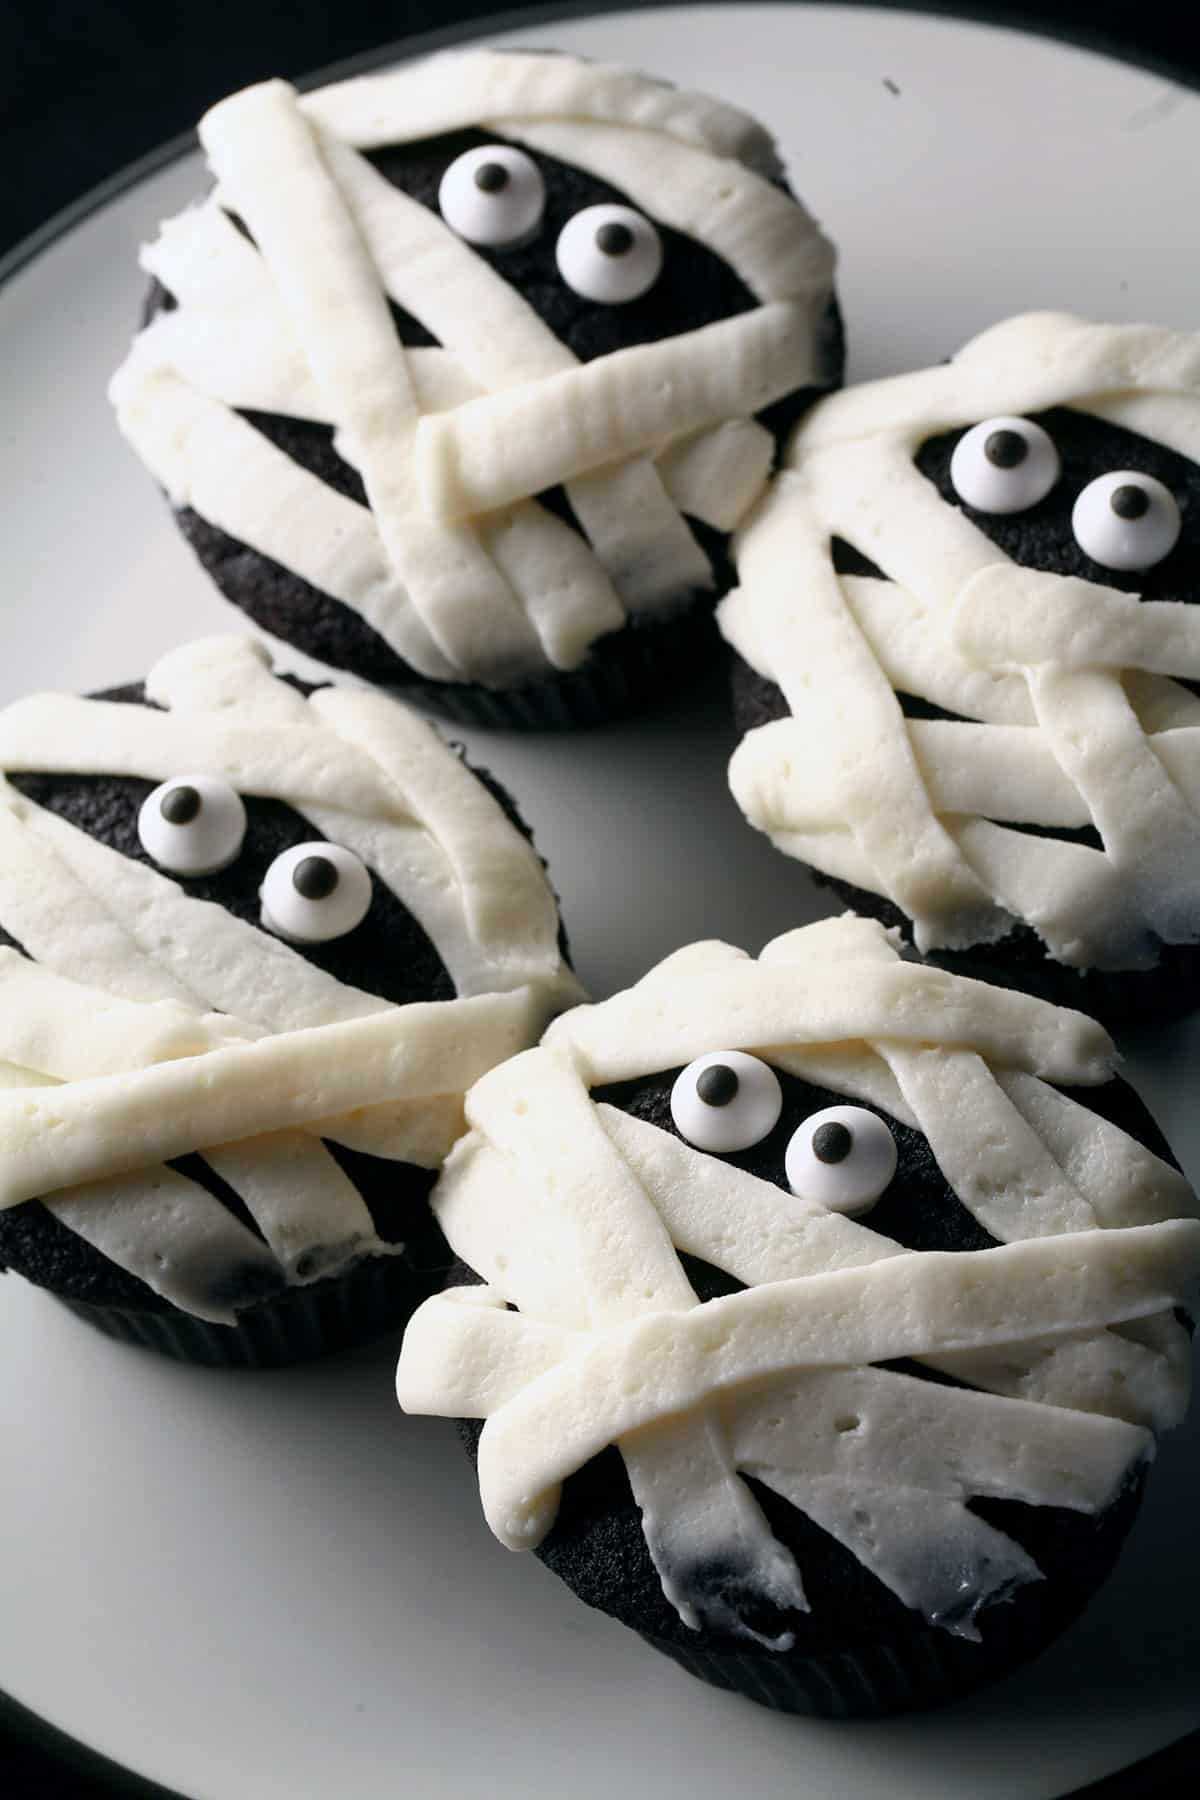 4 gluten-free black velvet cupcakes, decorated to look like mummies.